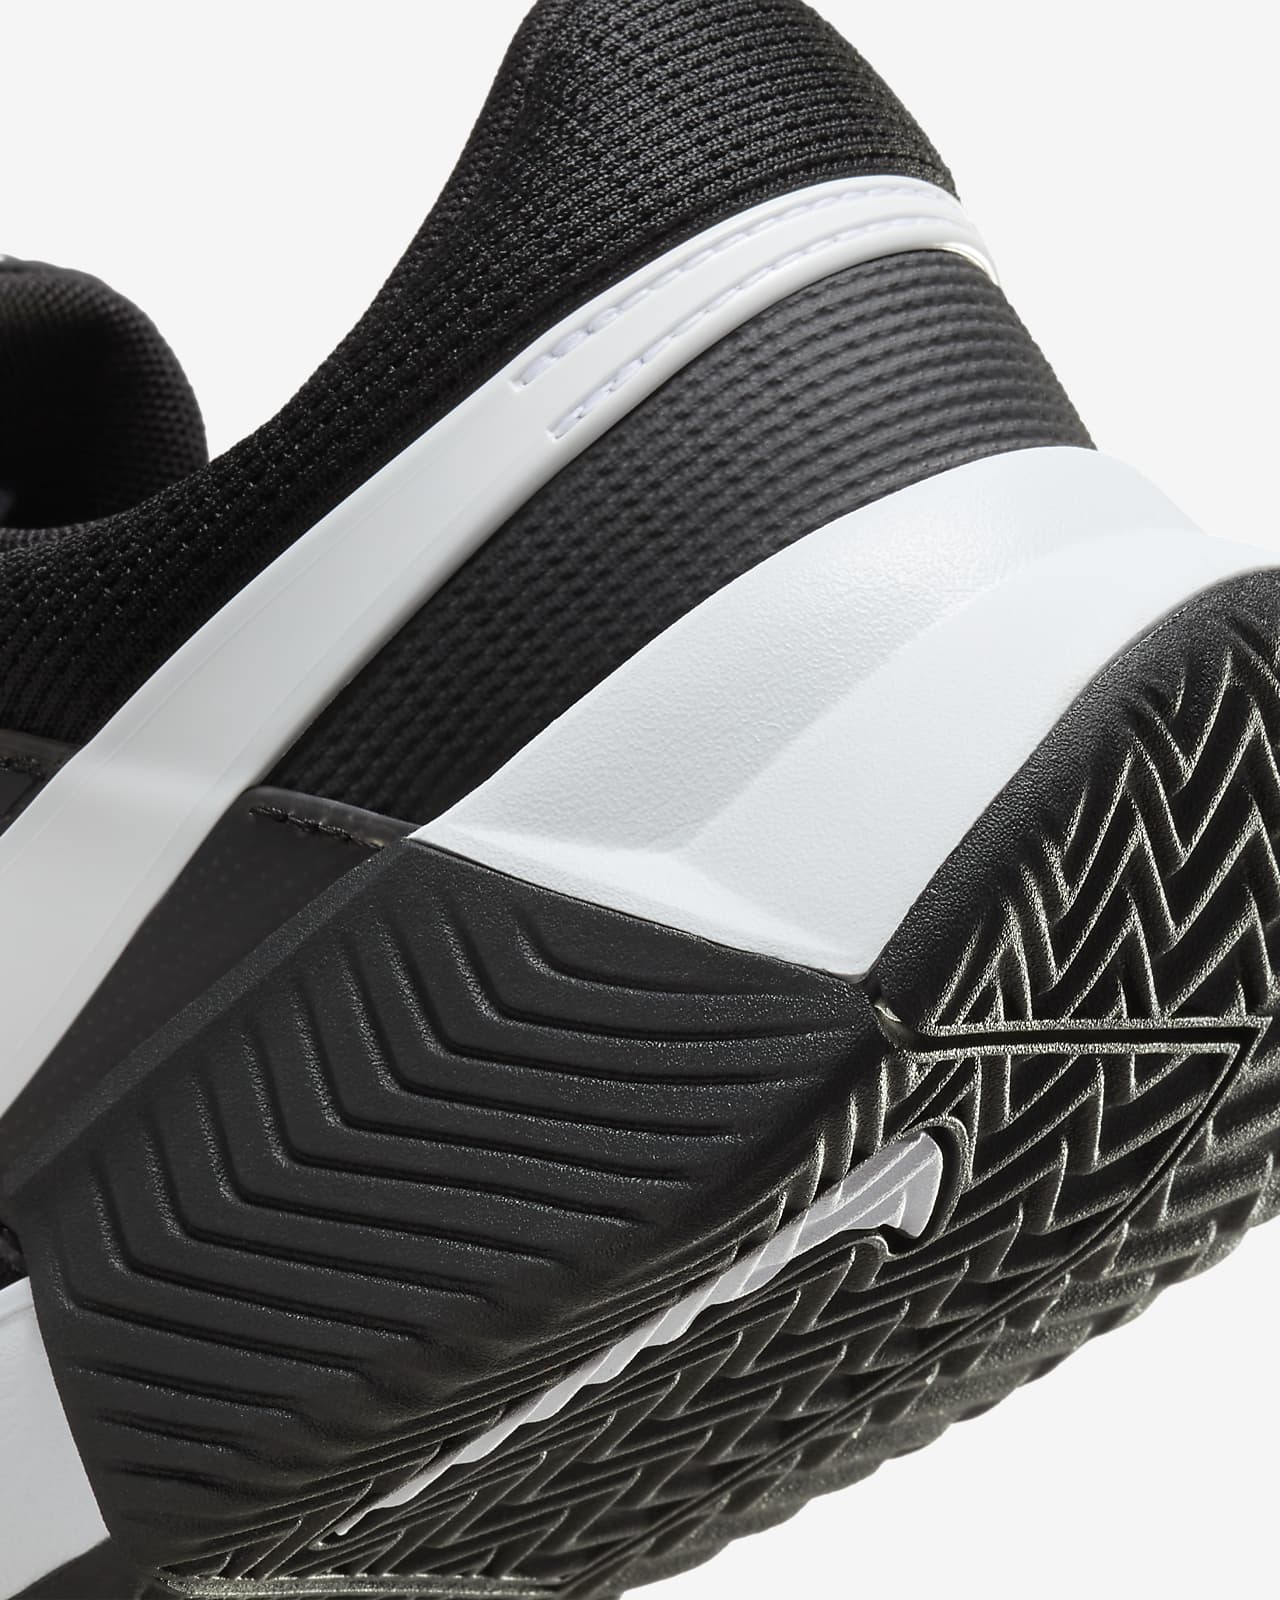 Nike Power Training Pant - black/white, Tennis Zone